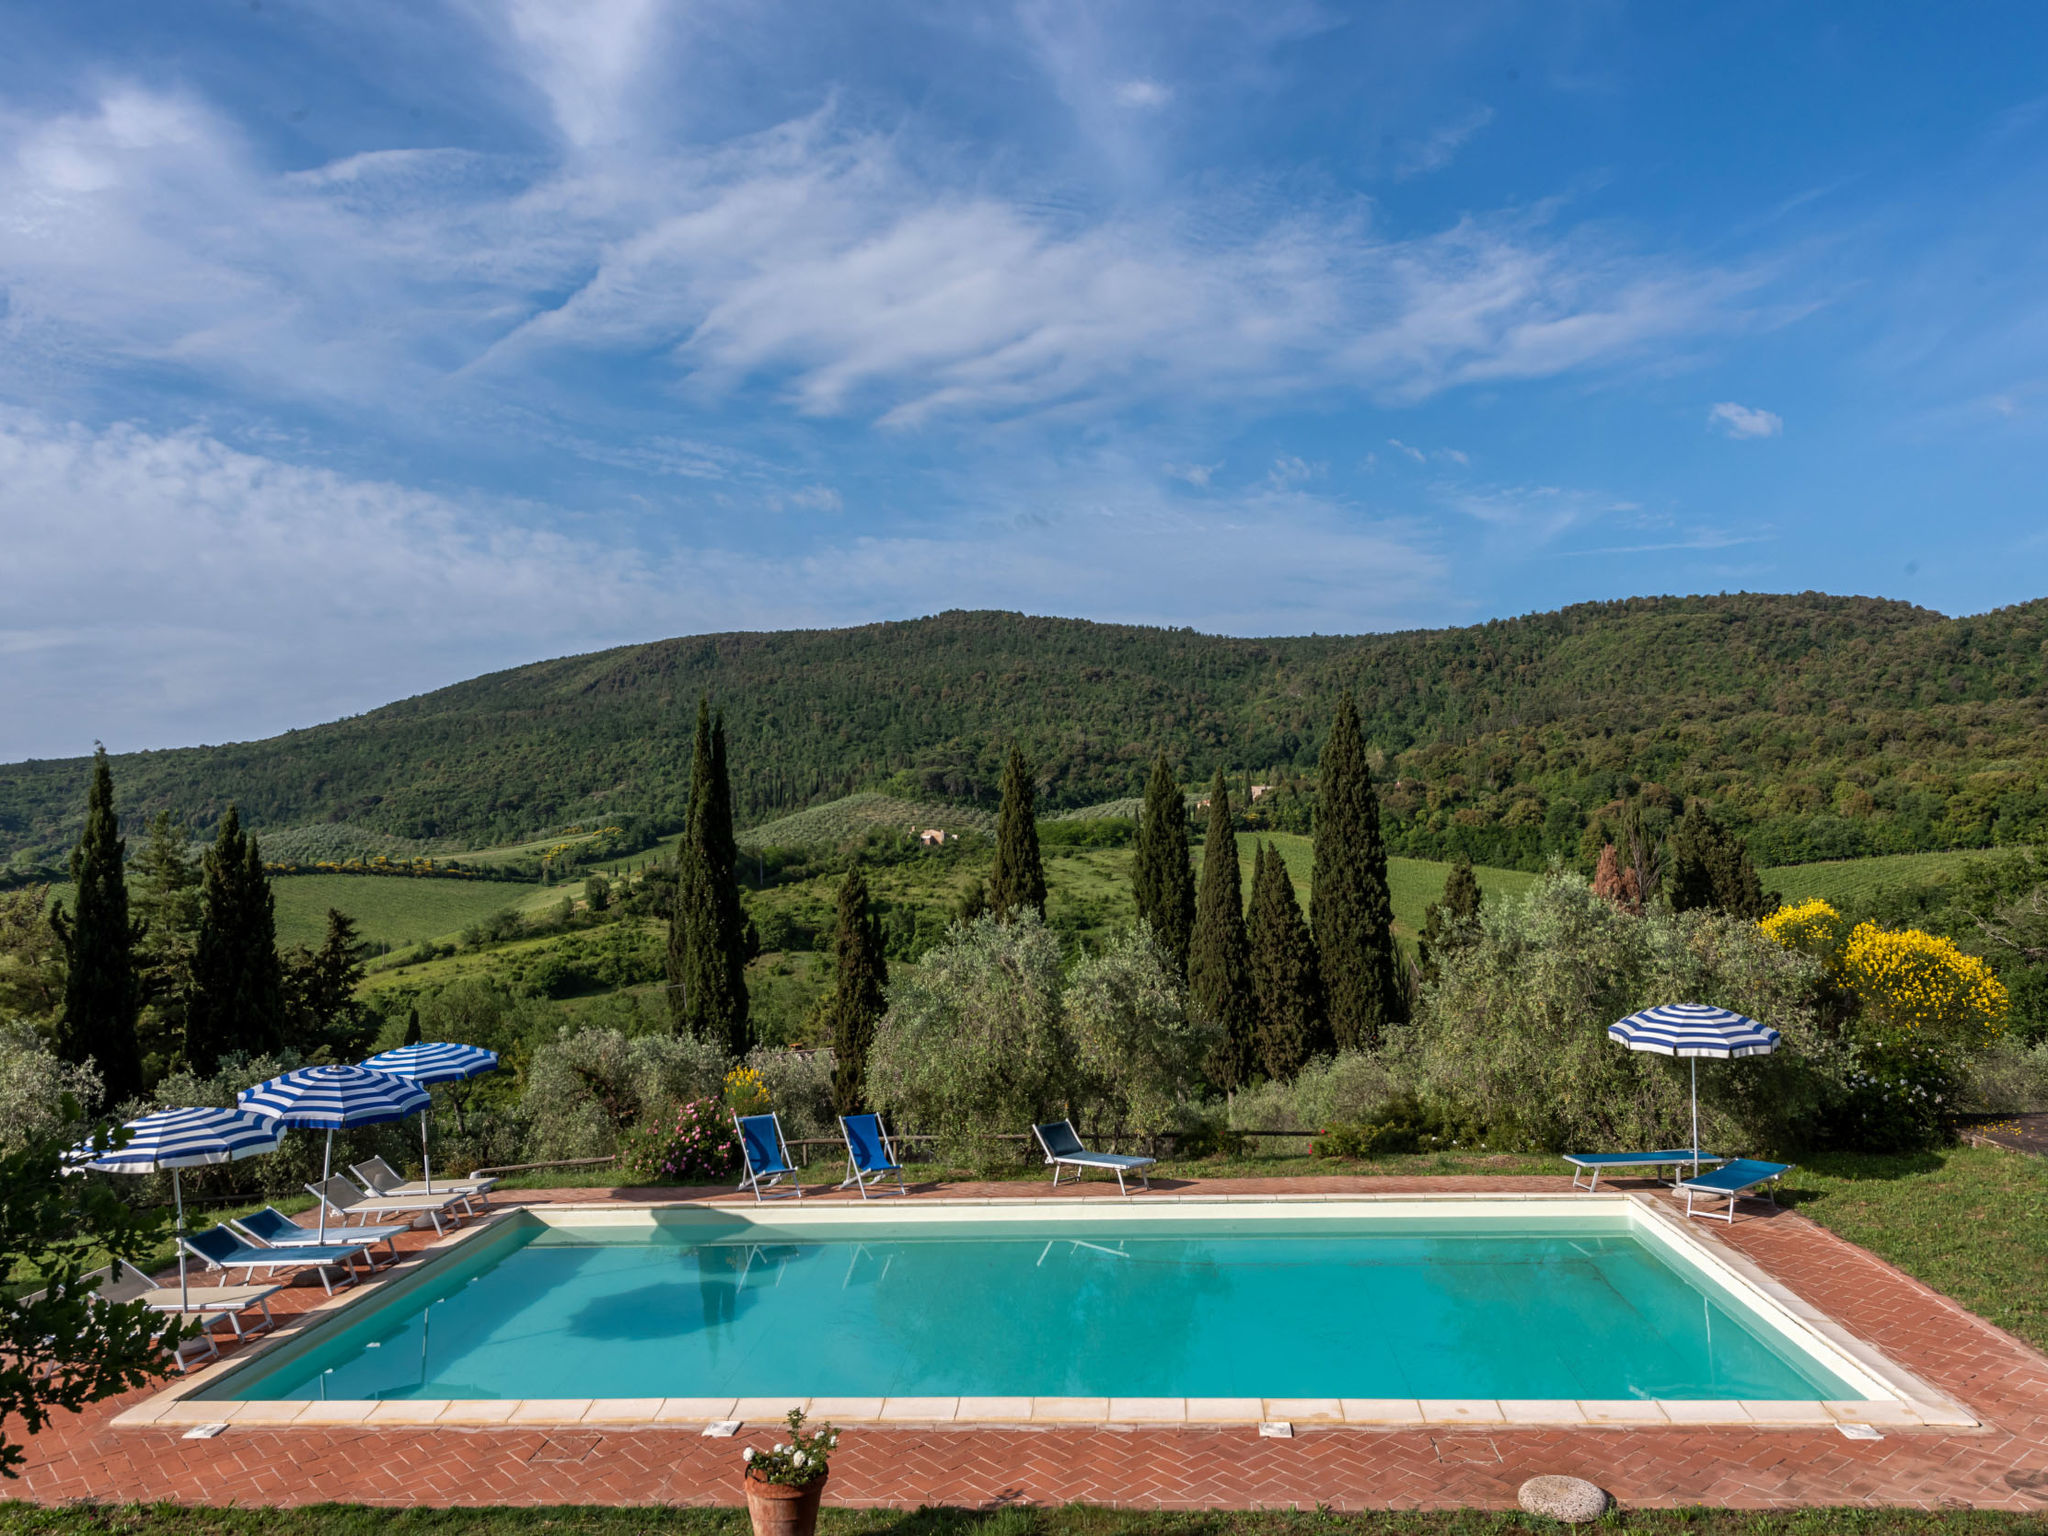 Foto 1 - Casa con 4 camere da letto a San Gimignano con piscina e giardino